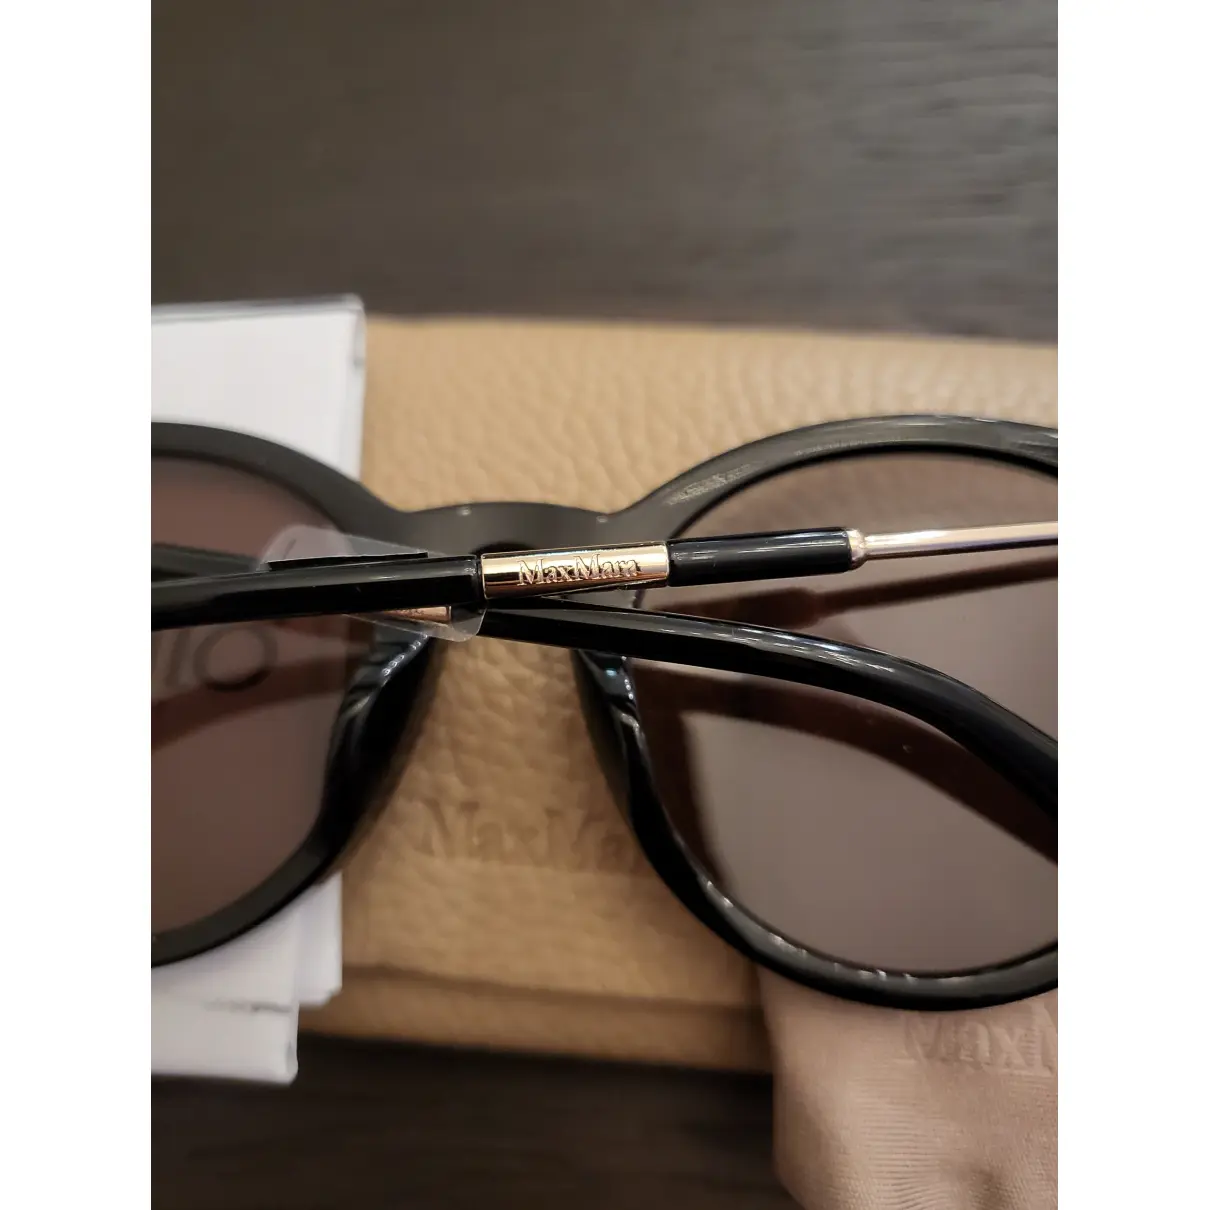 Buy Max Mara Max Mara Atelier sunglasses online